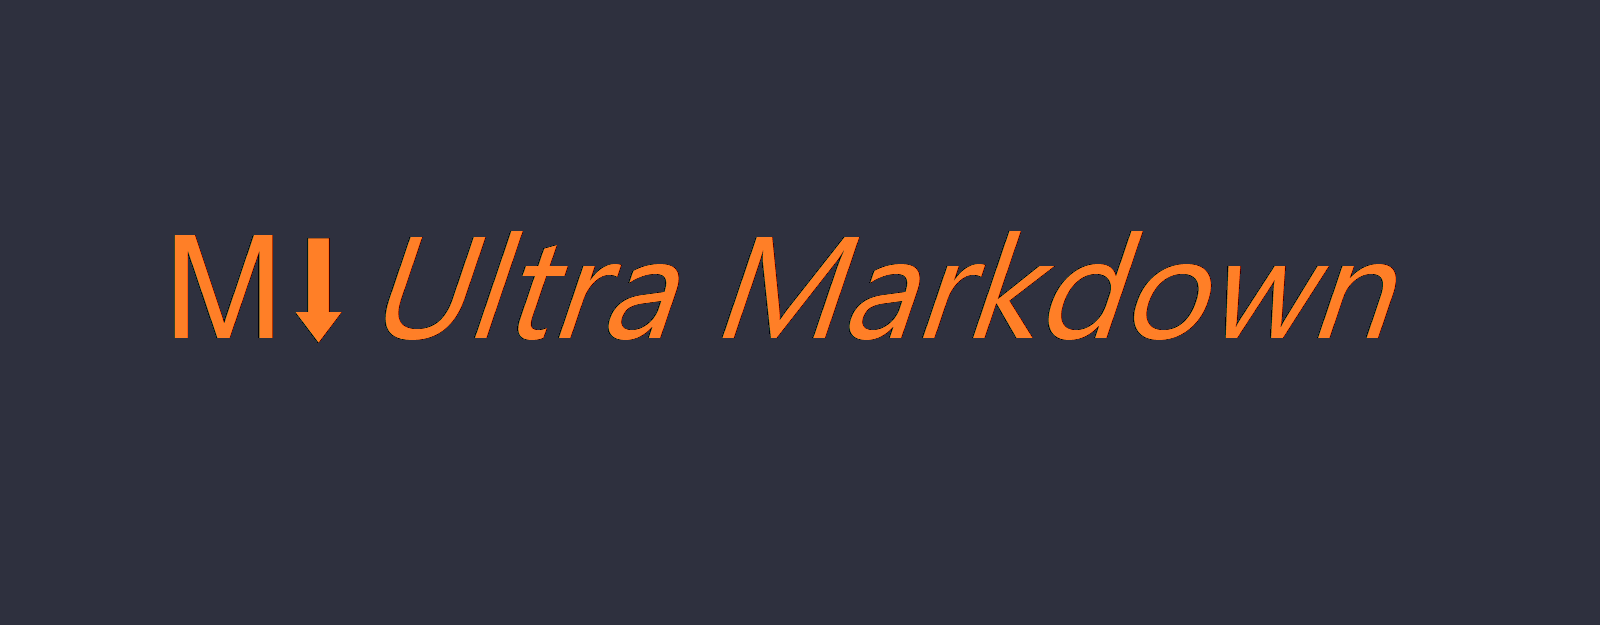 Ultra Markdown